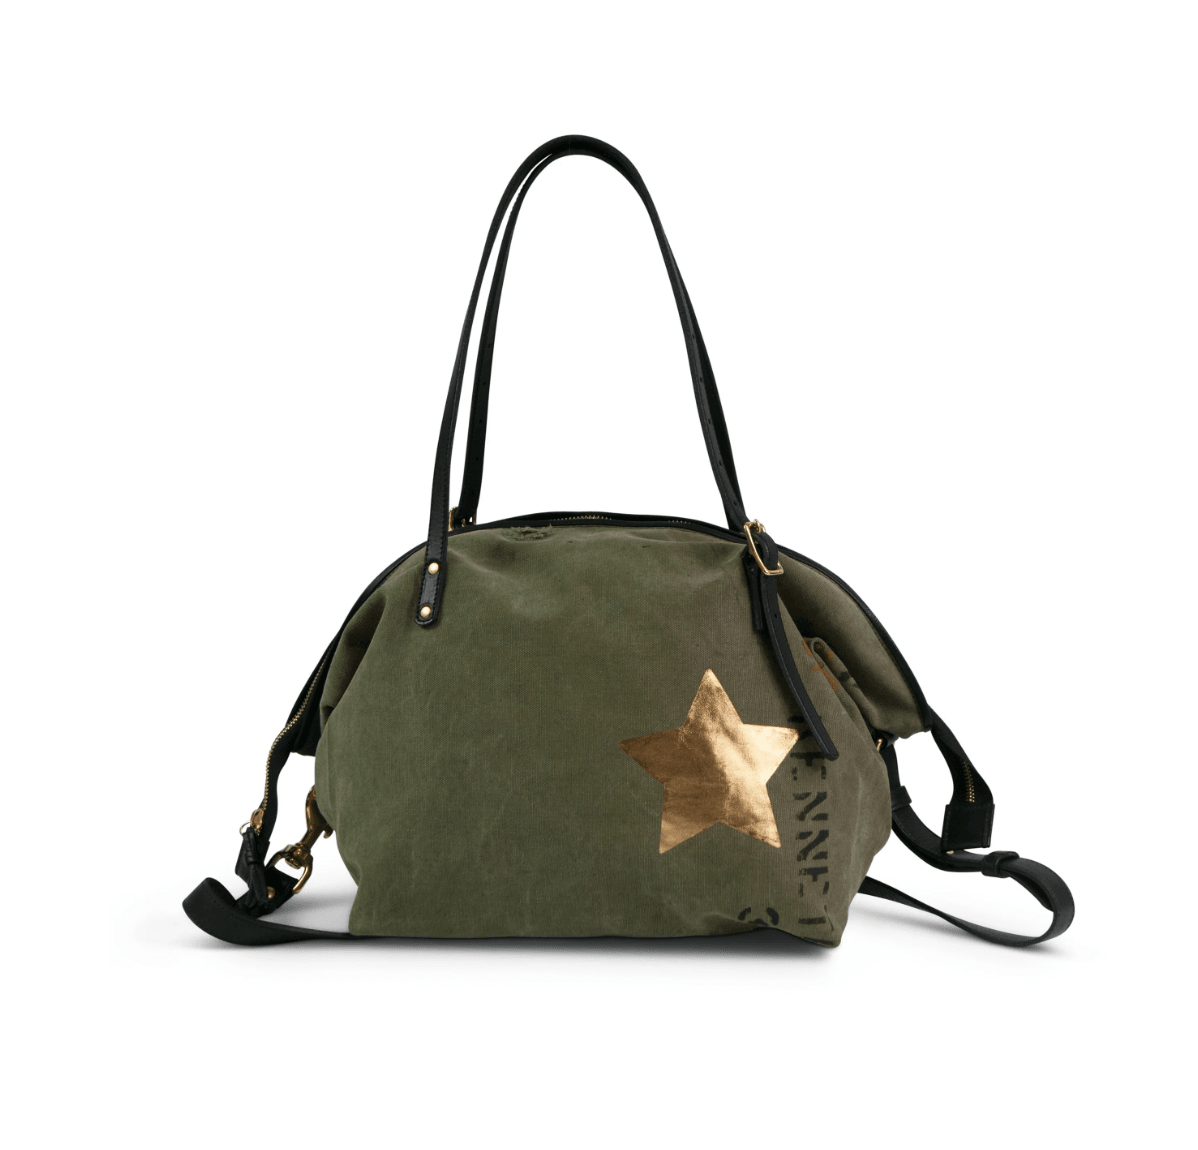 Army Star Canvas Crossbody Bag by Kempton & Co. - Haven